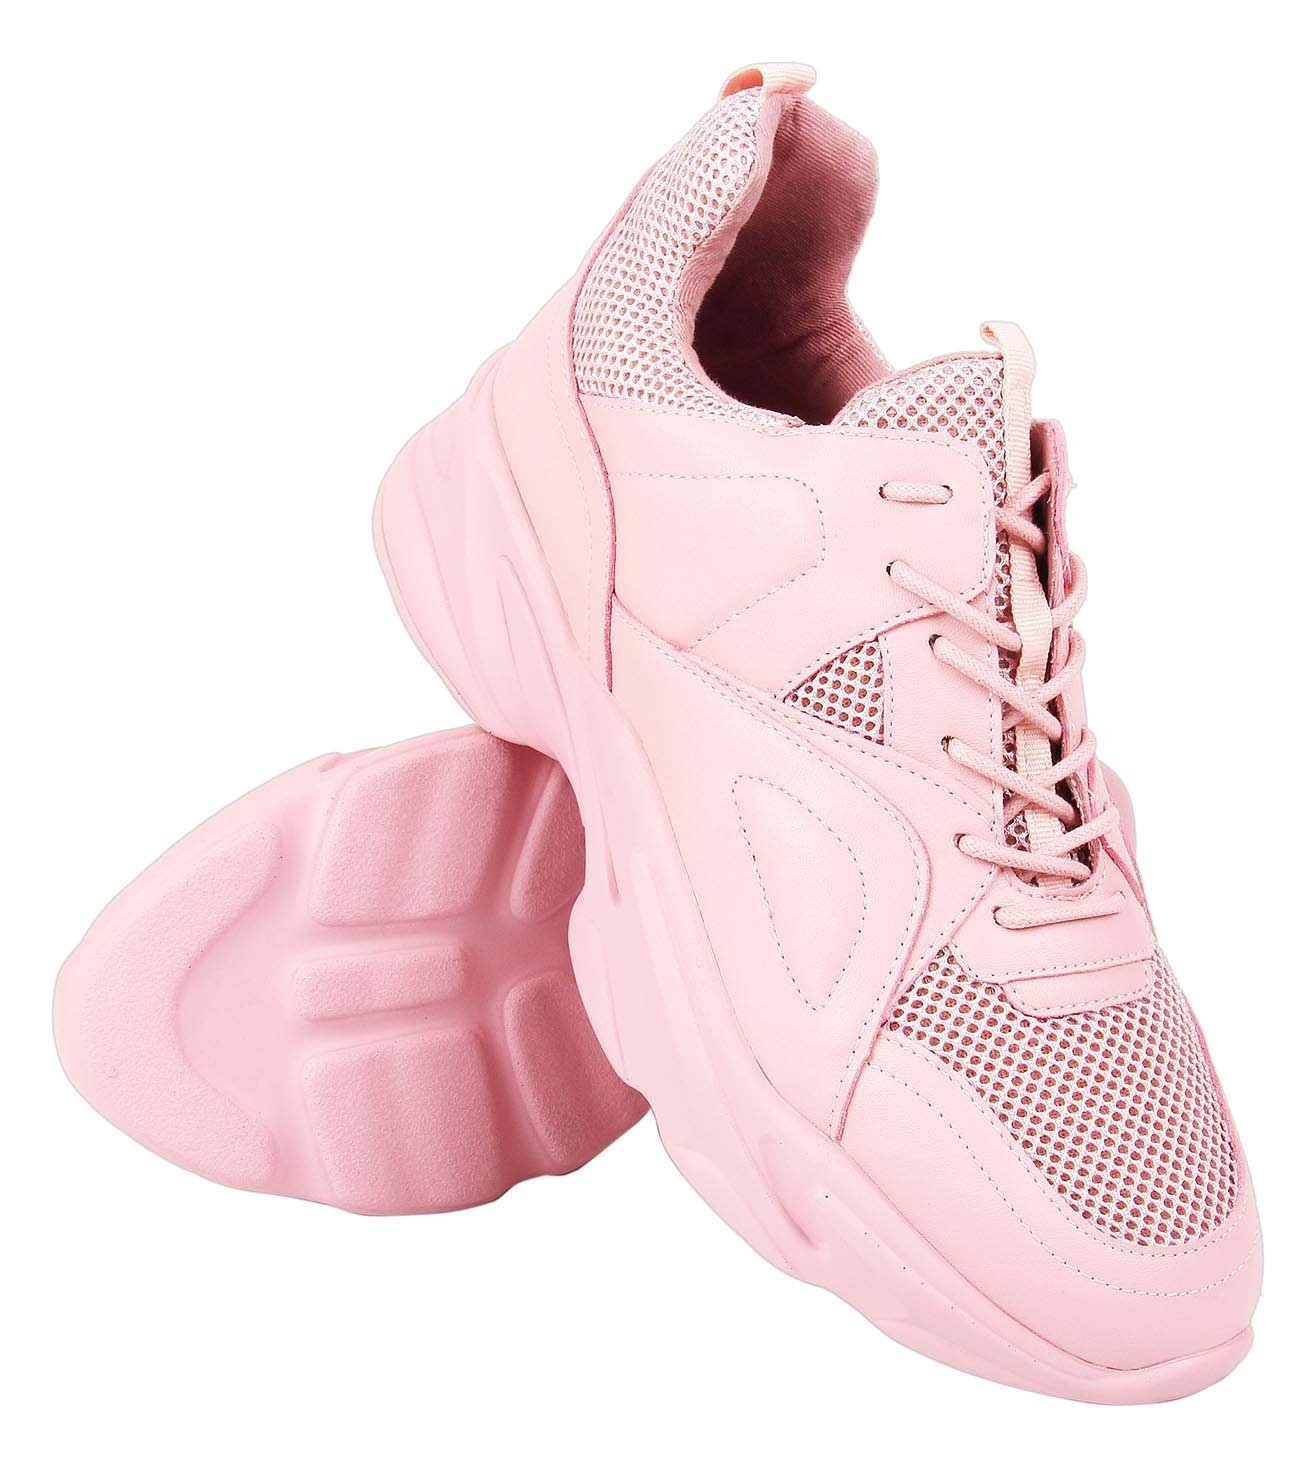 steve madden pink sneakers